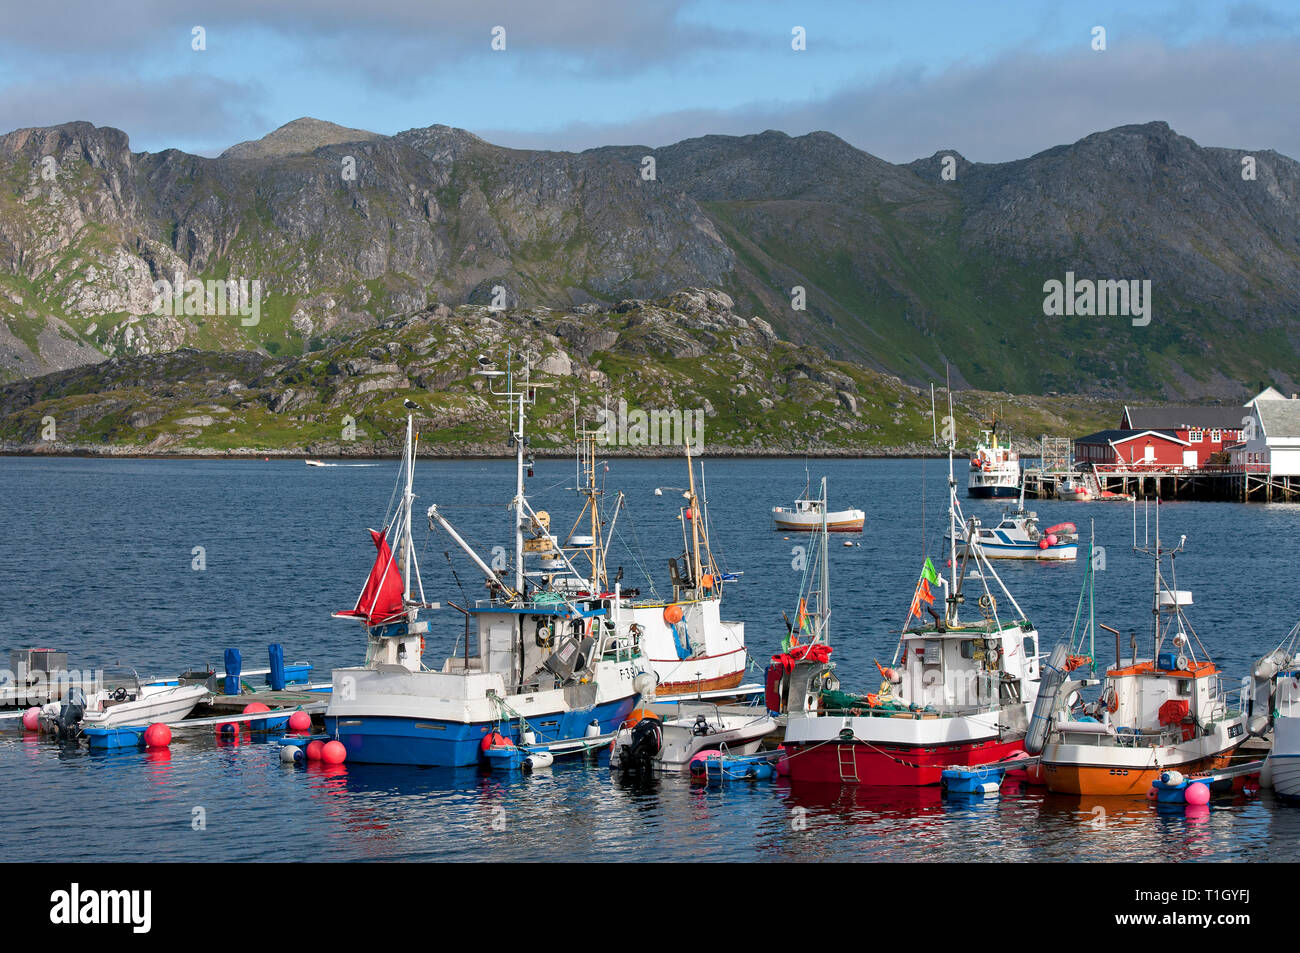 Boats at Gjesvaer, fishing village in County Finnmark, Norway Stock Photo